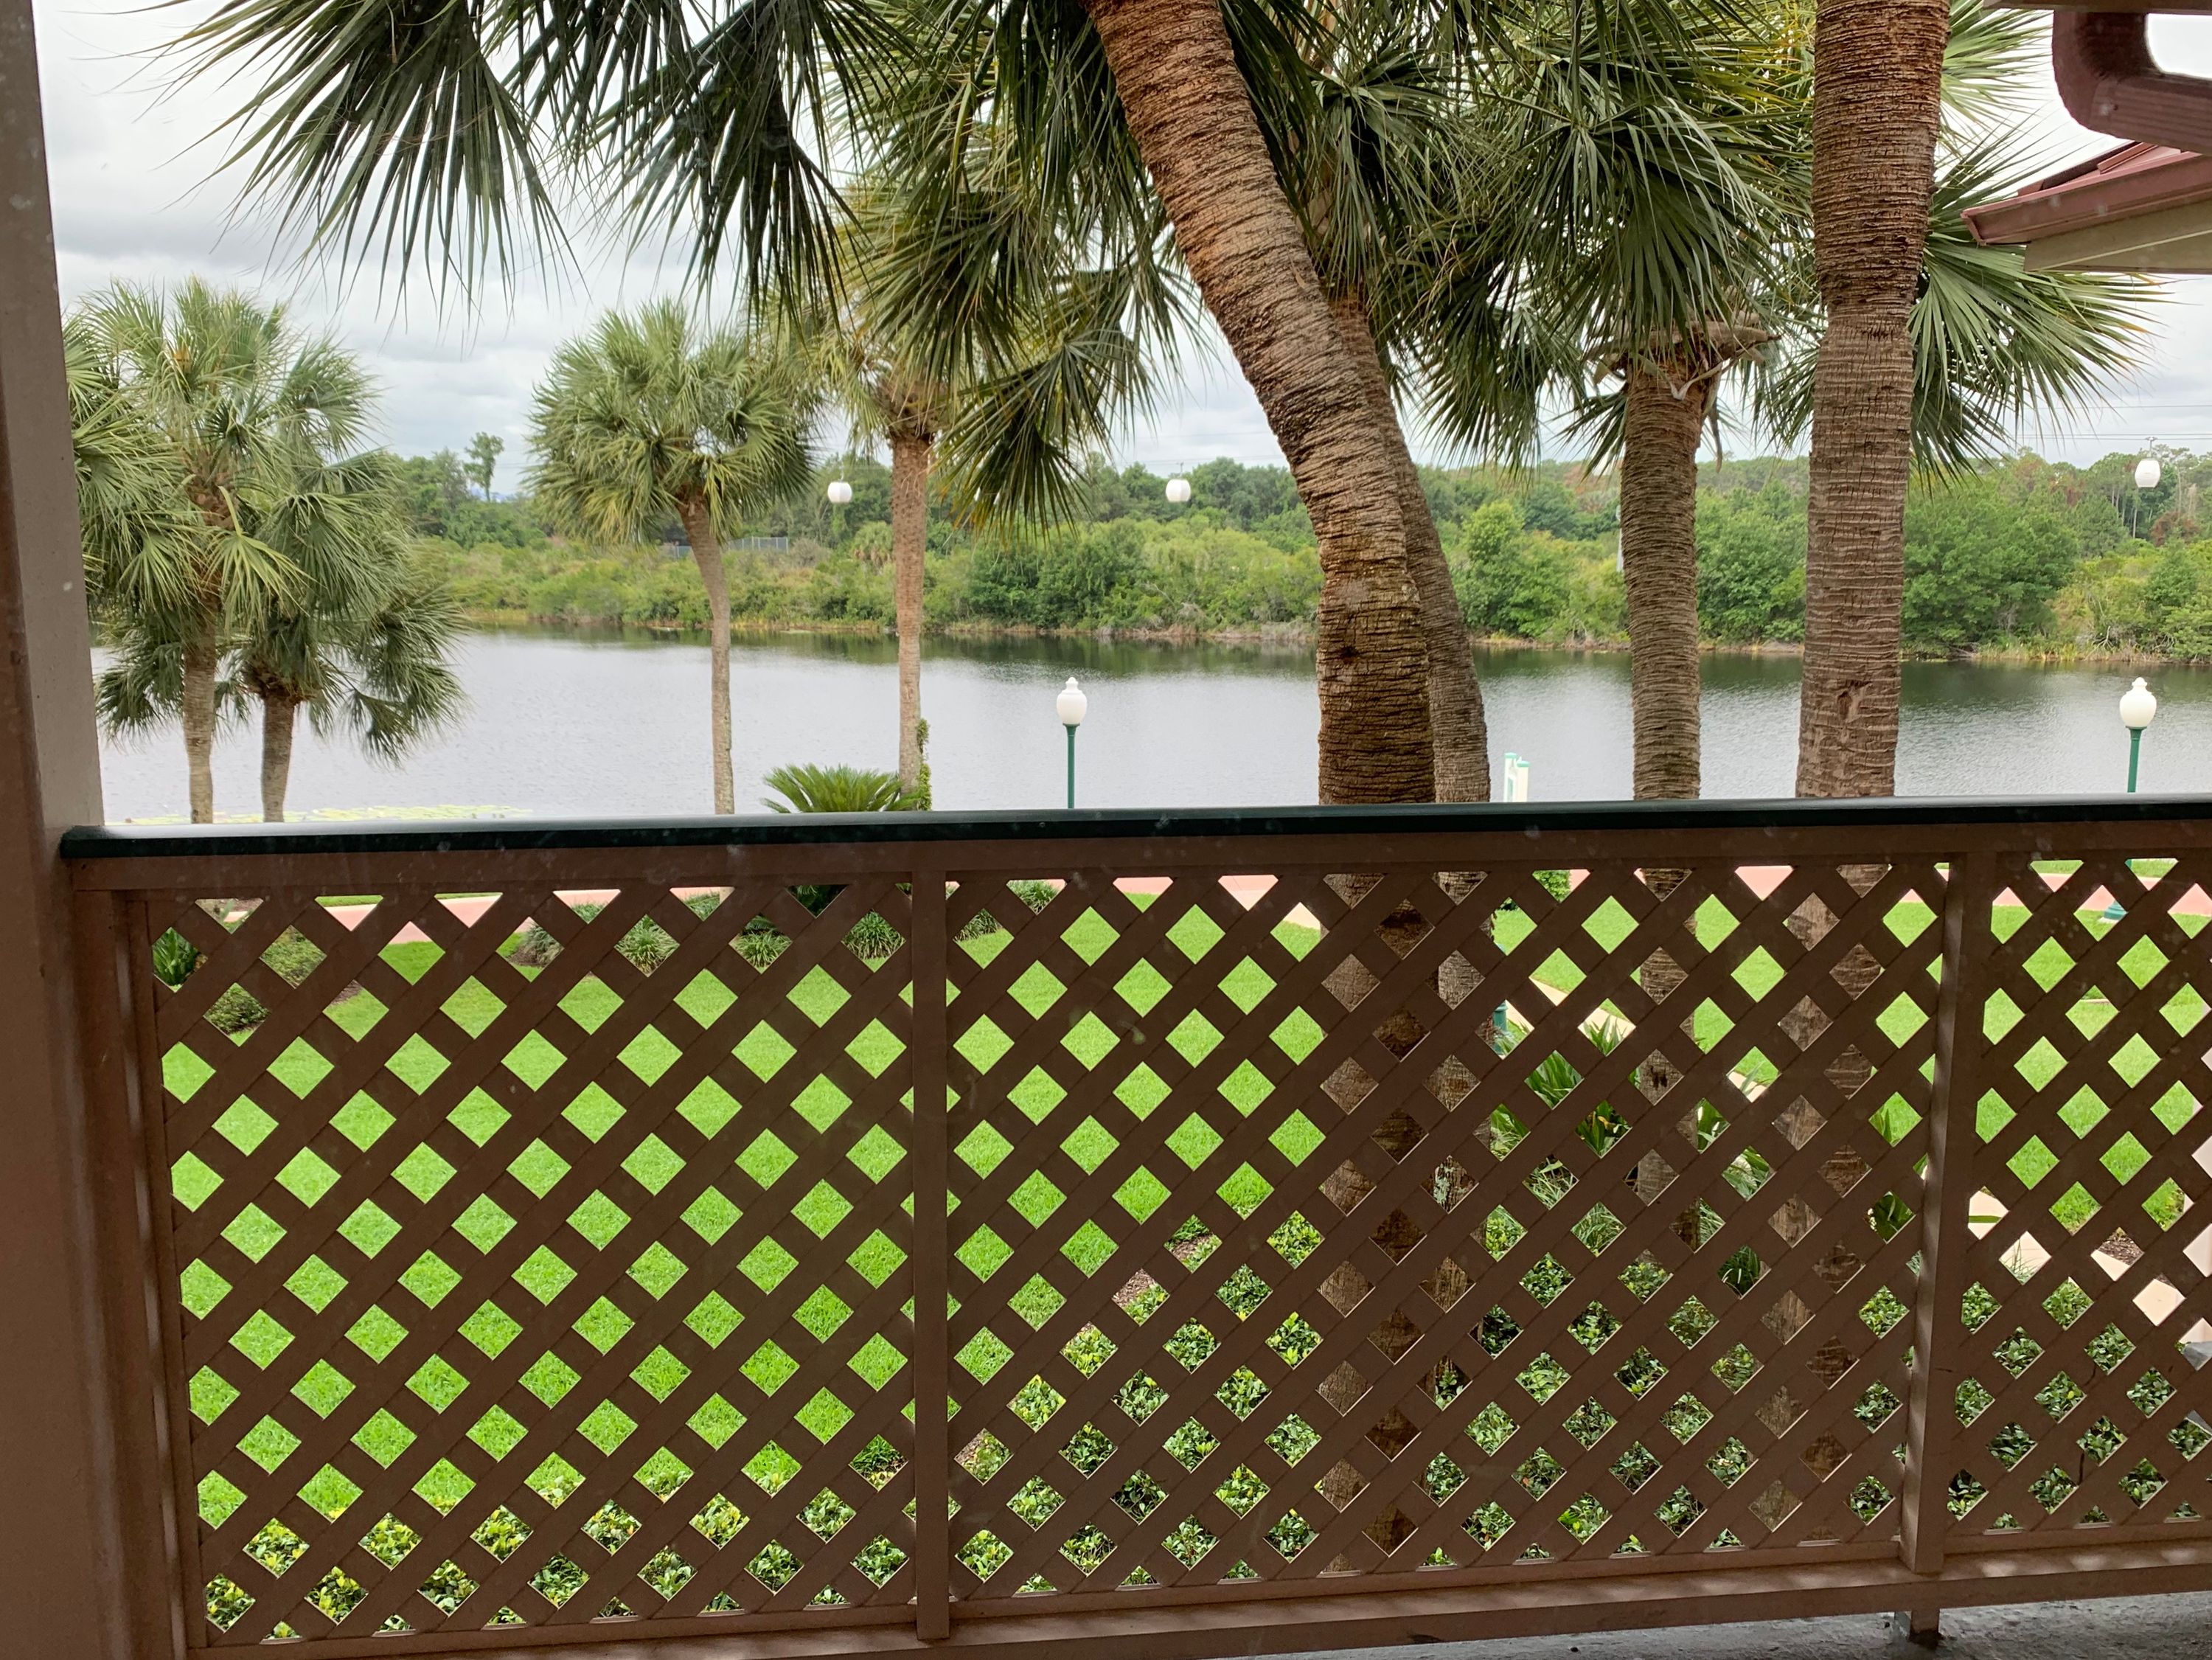 A “water view” at Disney’s Caribbean Beach Resort in Florida.